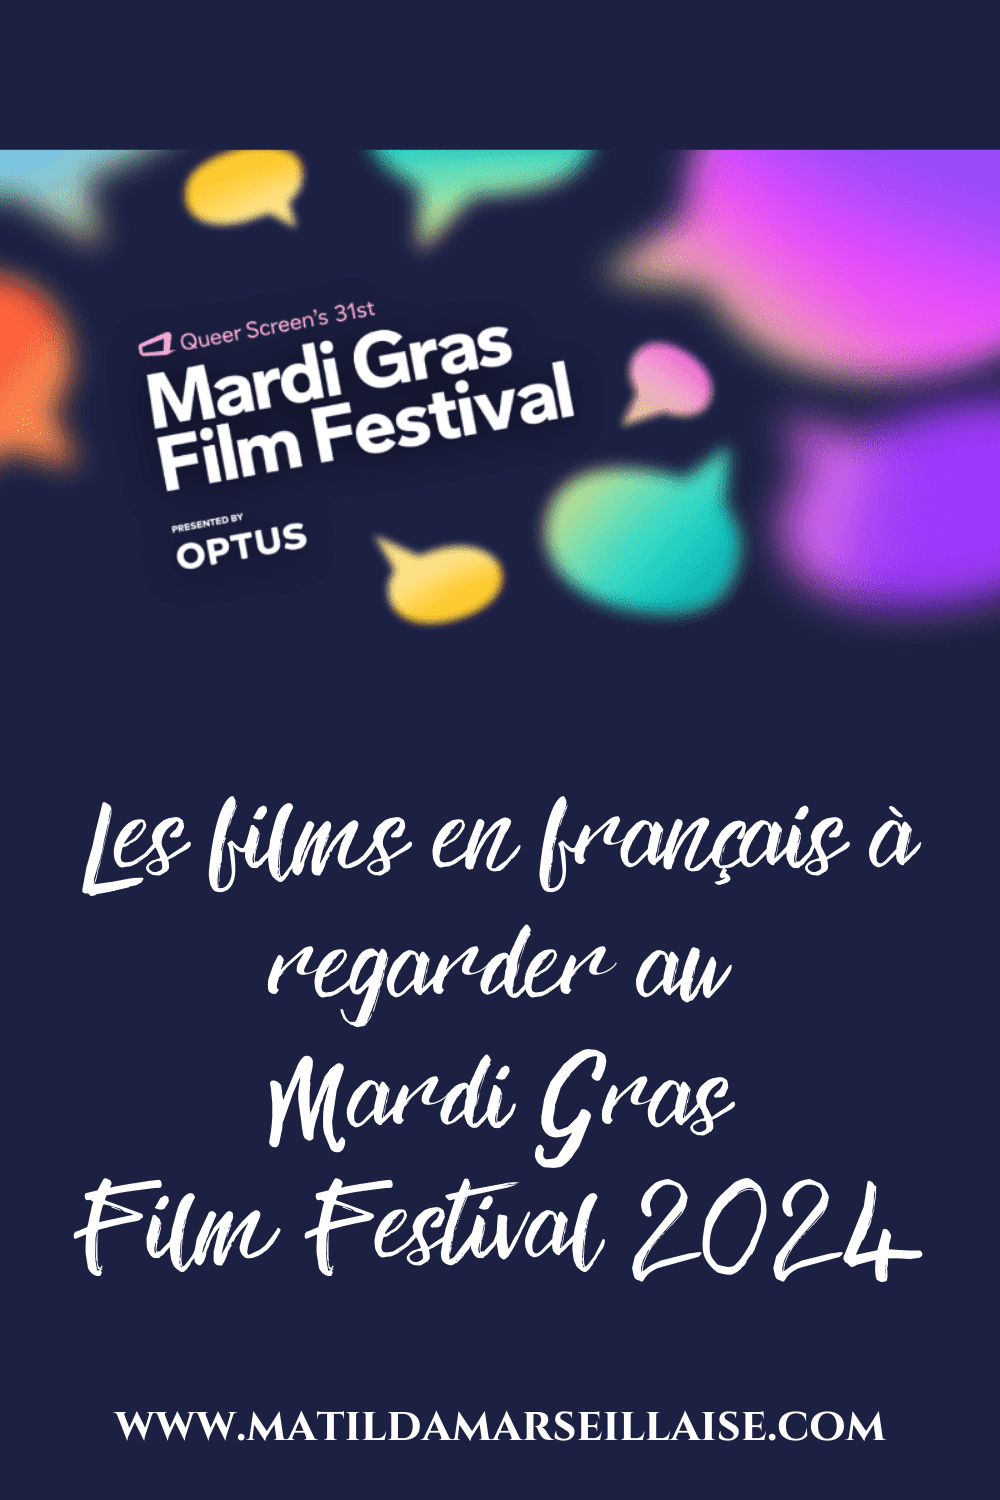 Mardi Gras Film Festival 2023